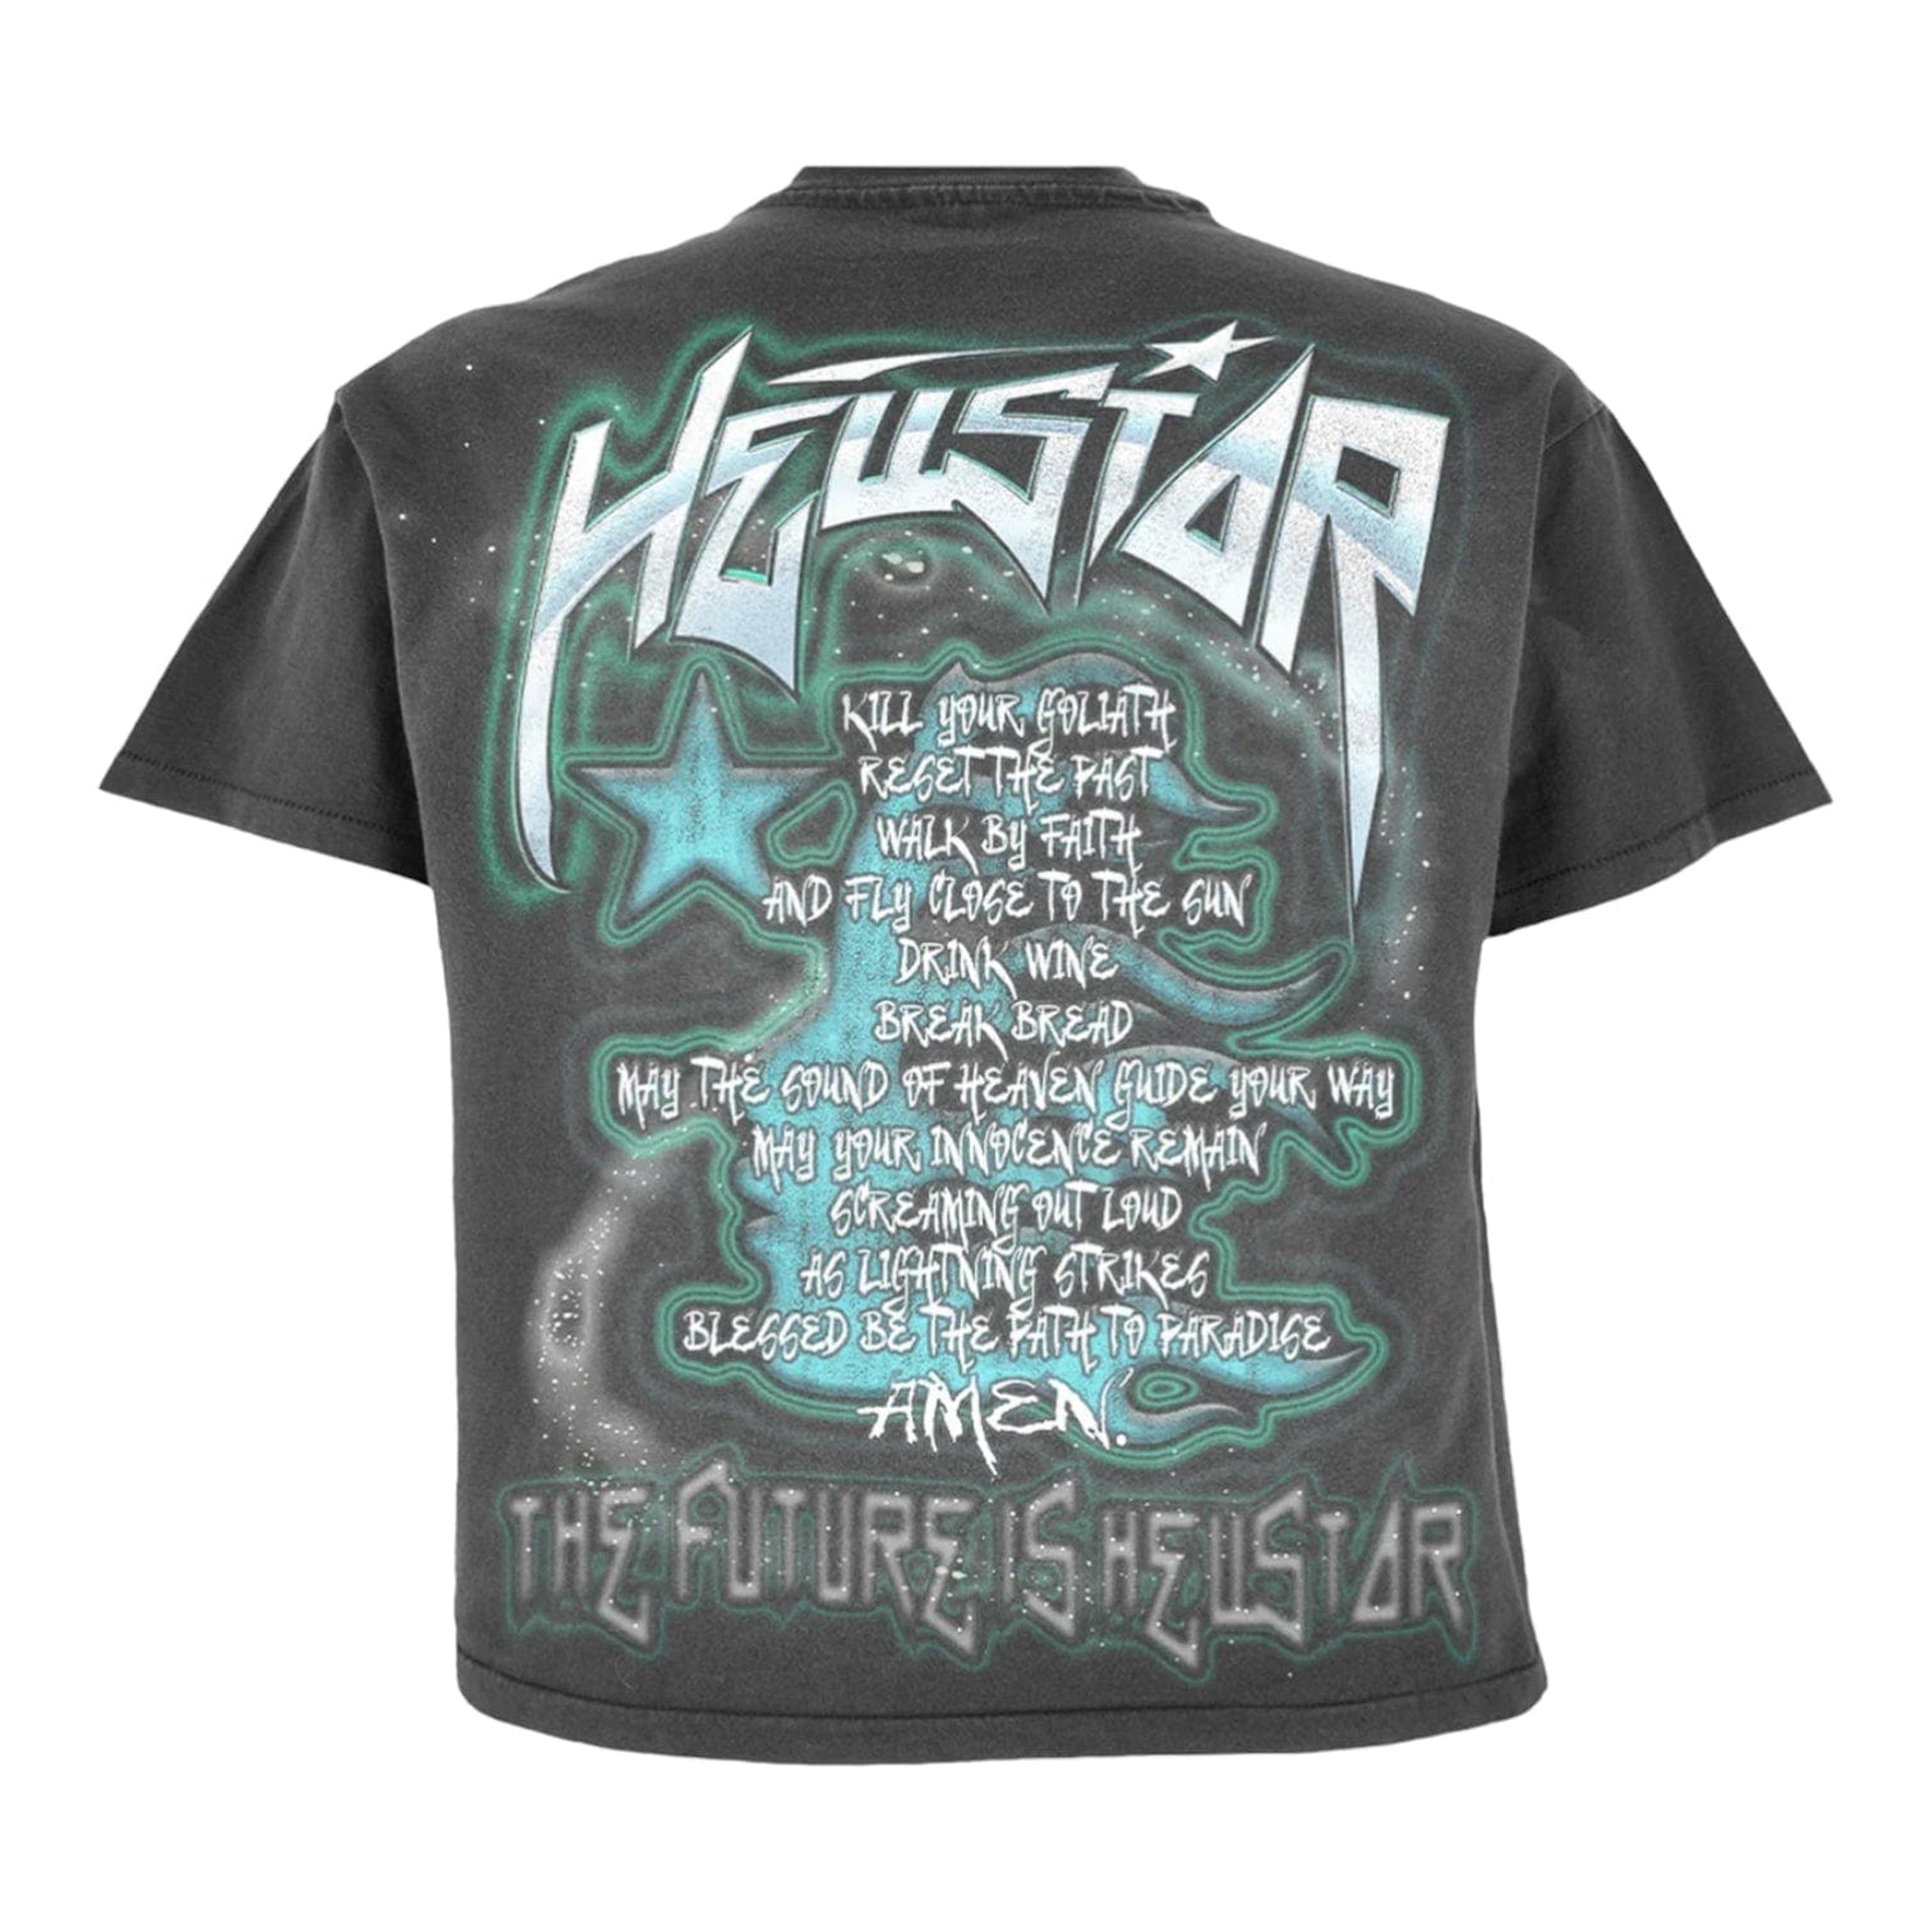 Alternate View 1 of Hellstar Studios The Future Short Sleeve Tee Shirt Washed Black